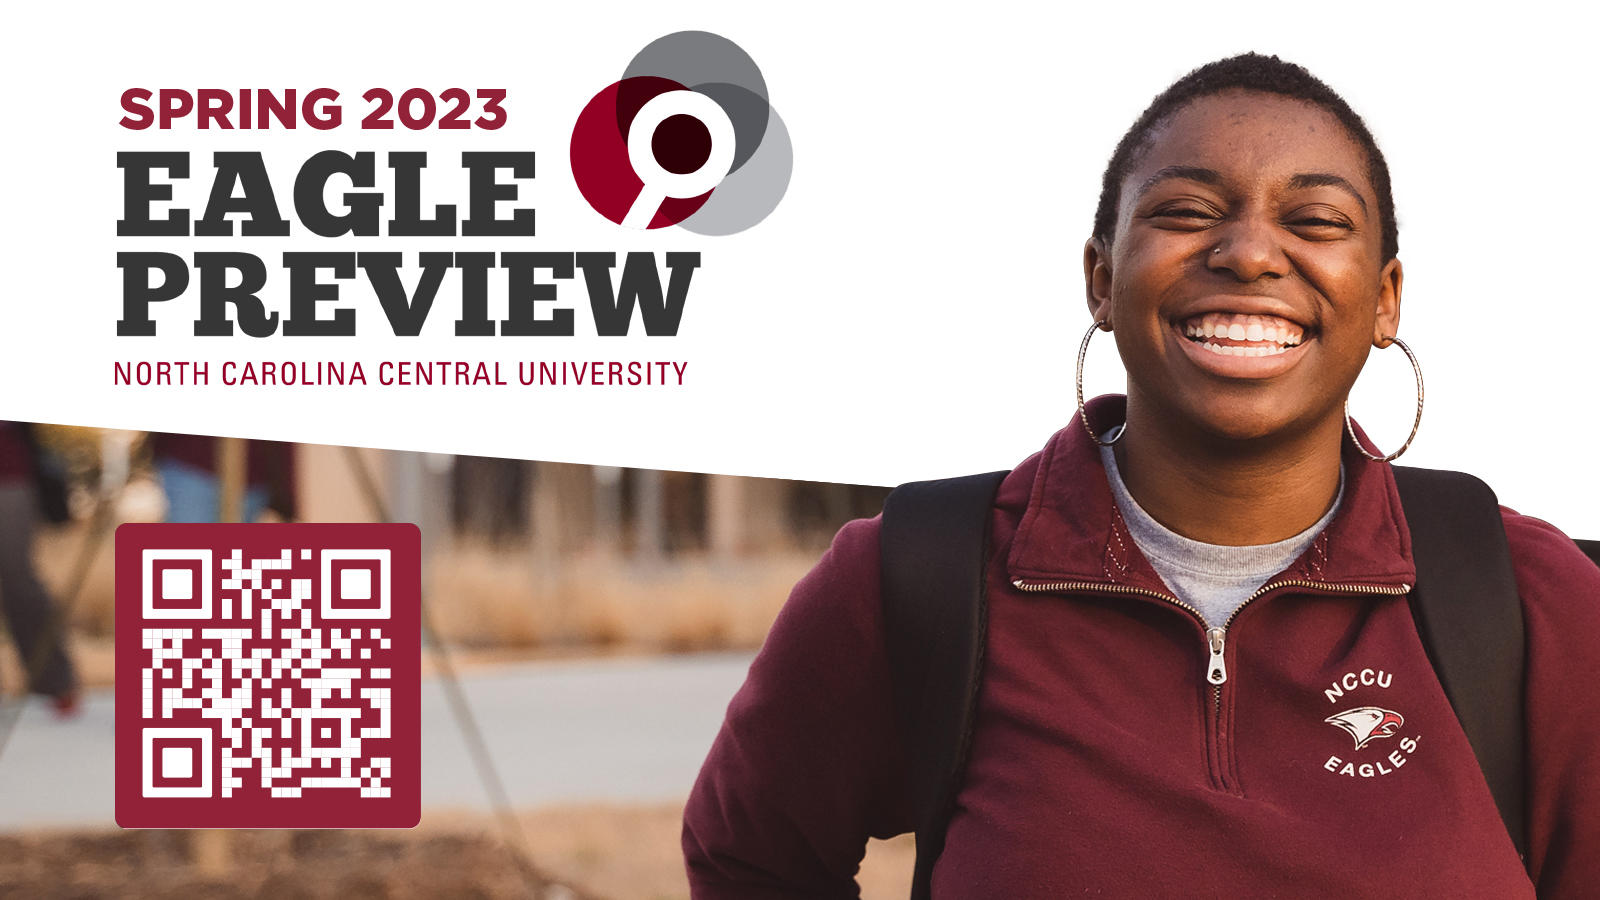 Spring 2023 Eagle Preview North Carolina Central University | NCCU student smiling